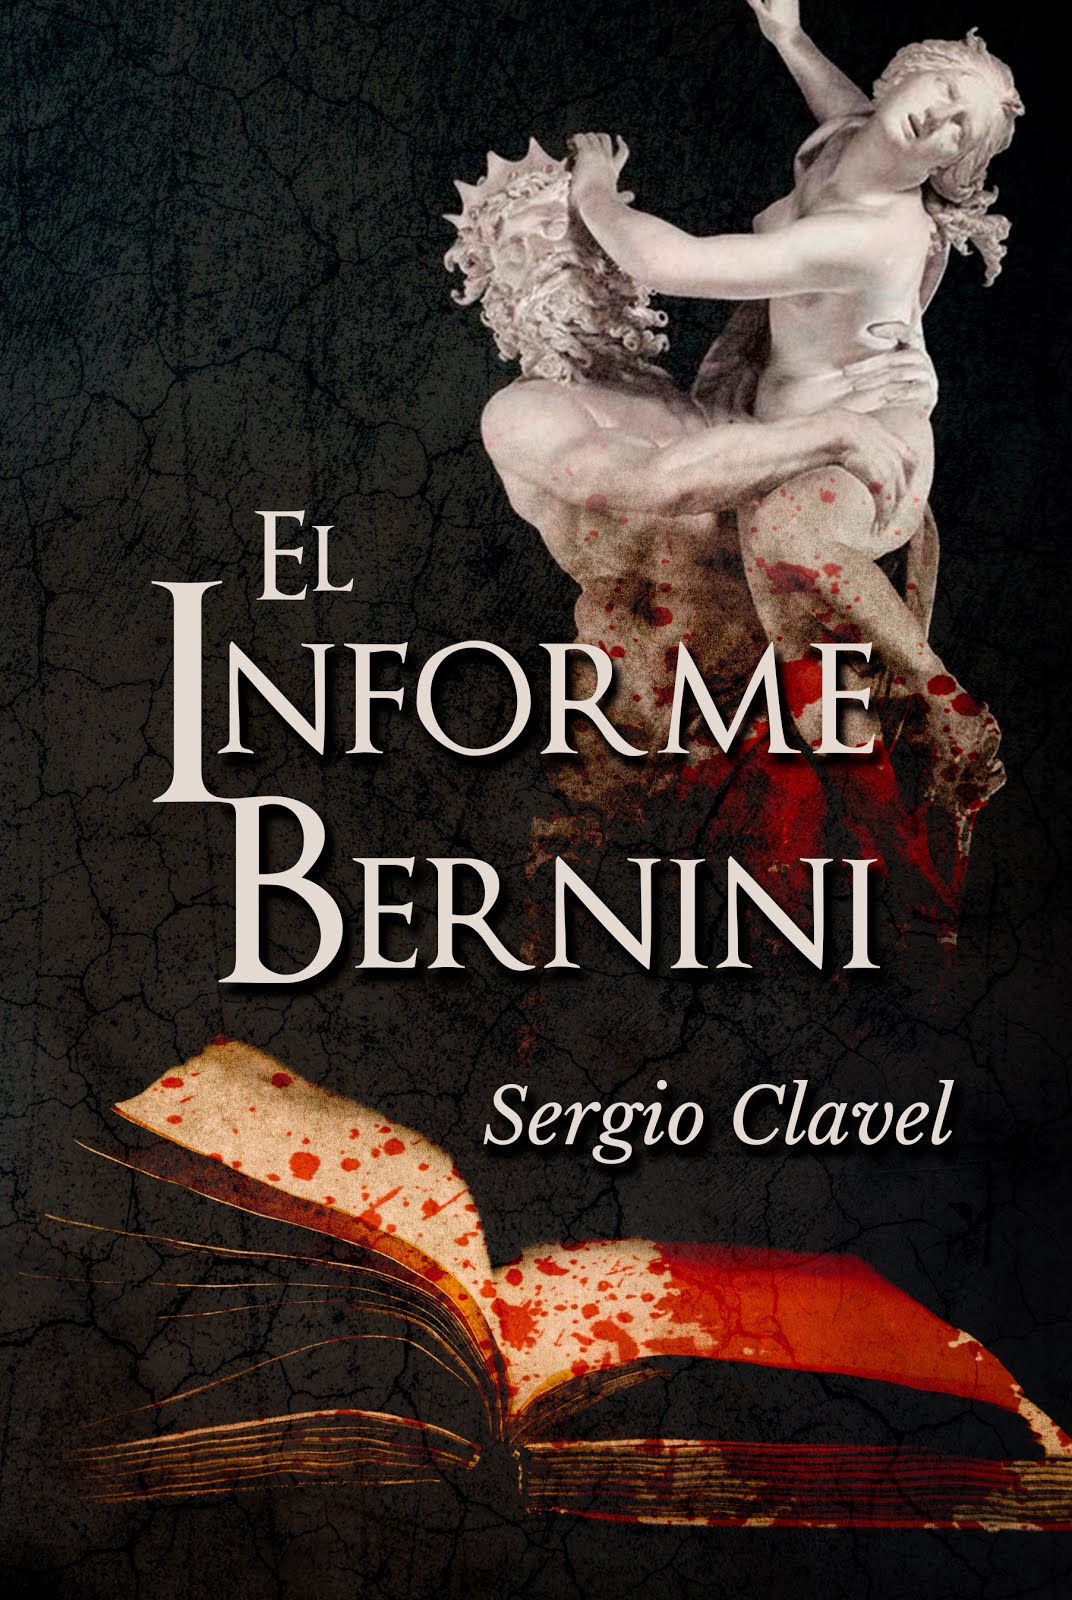 El informe Bernini